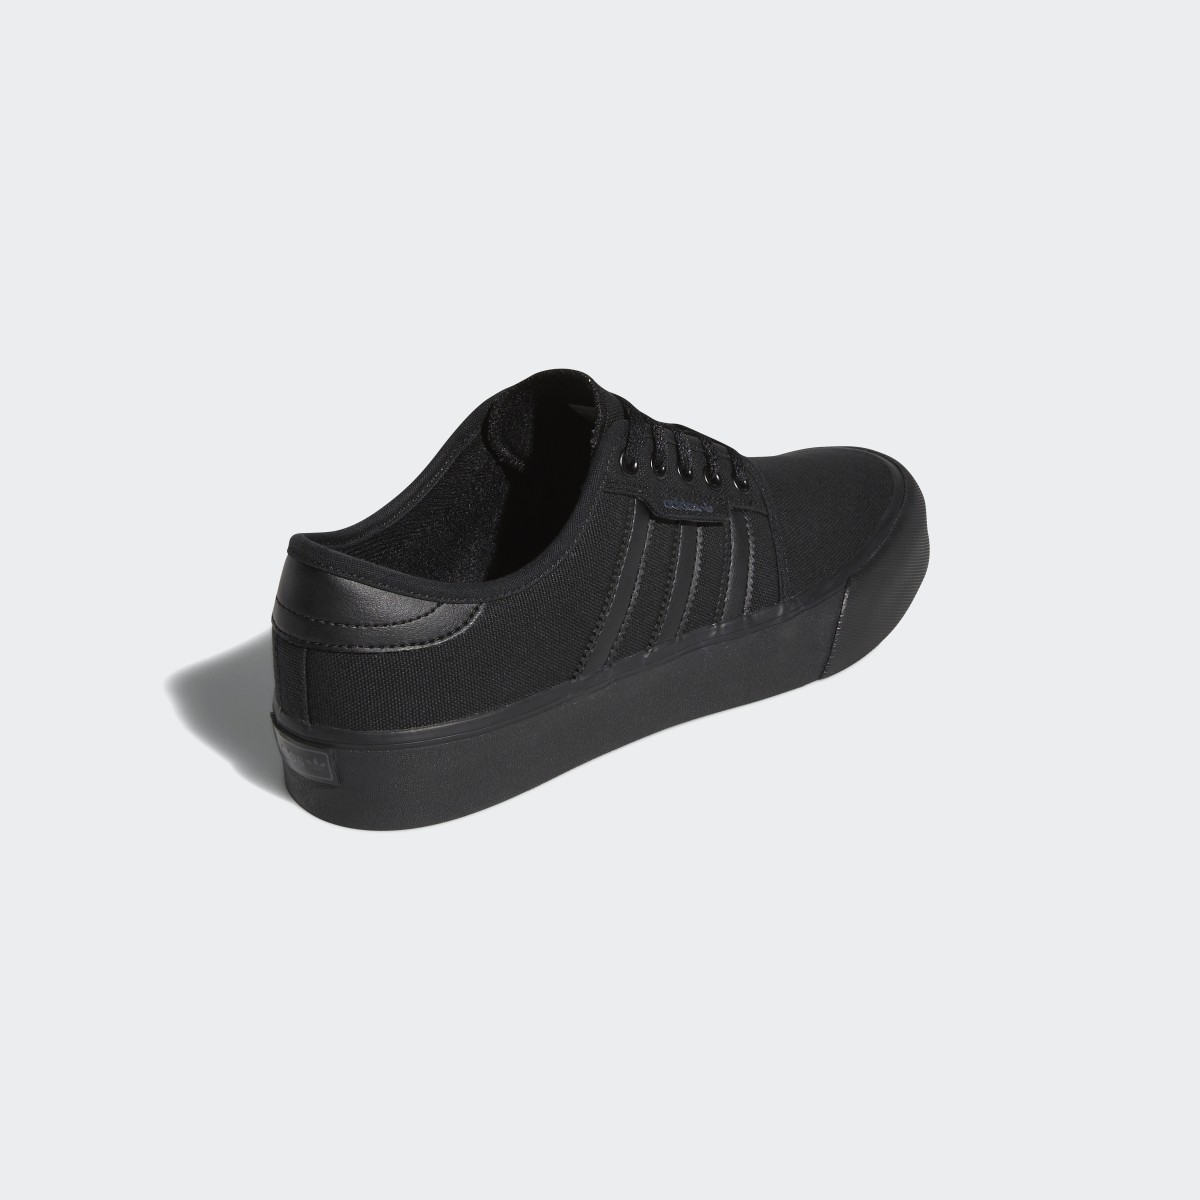 Adidas Seeley XT Shoes. 6